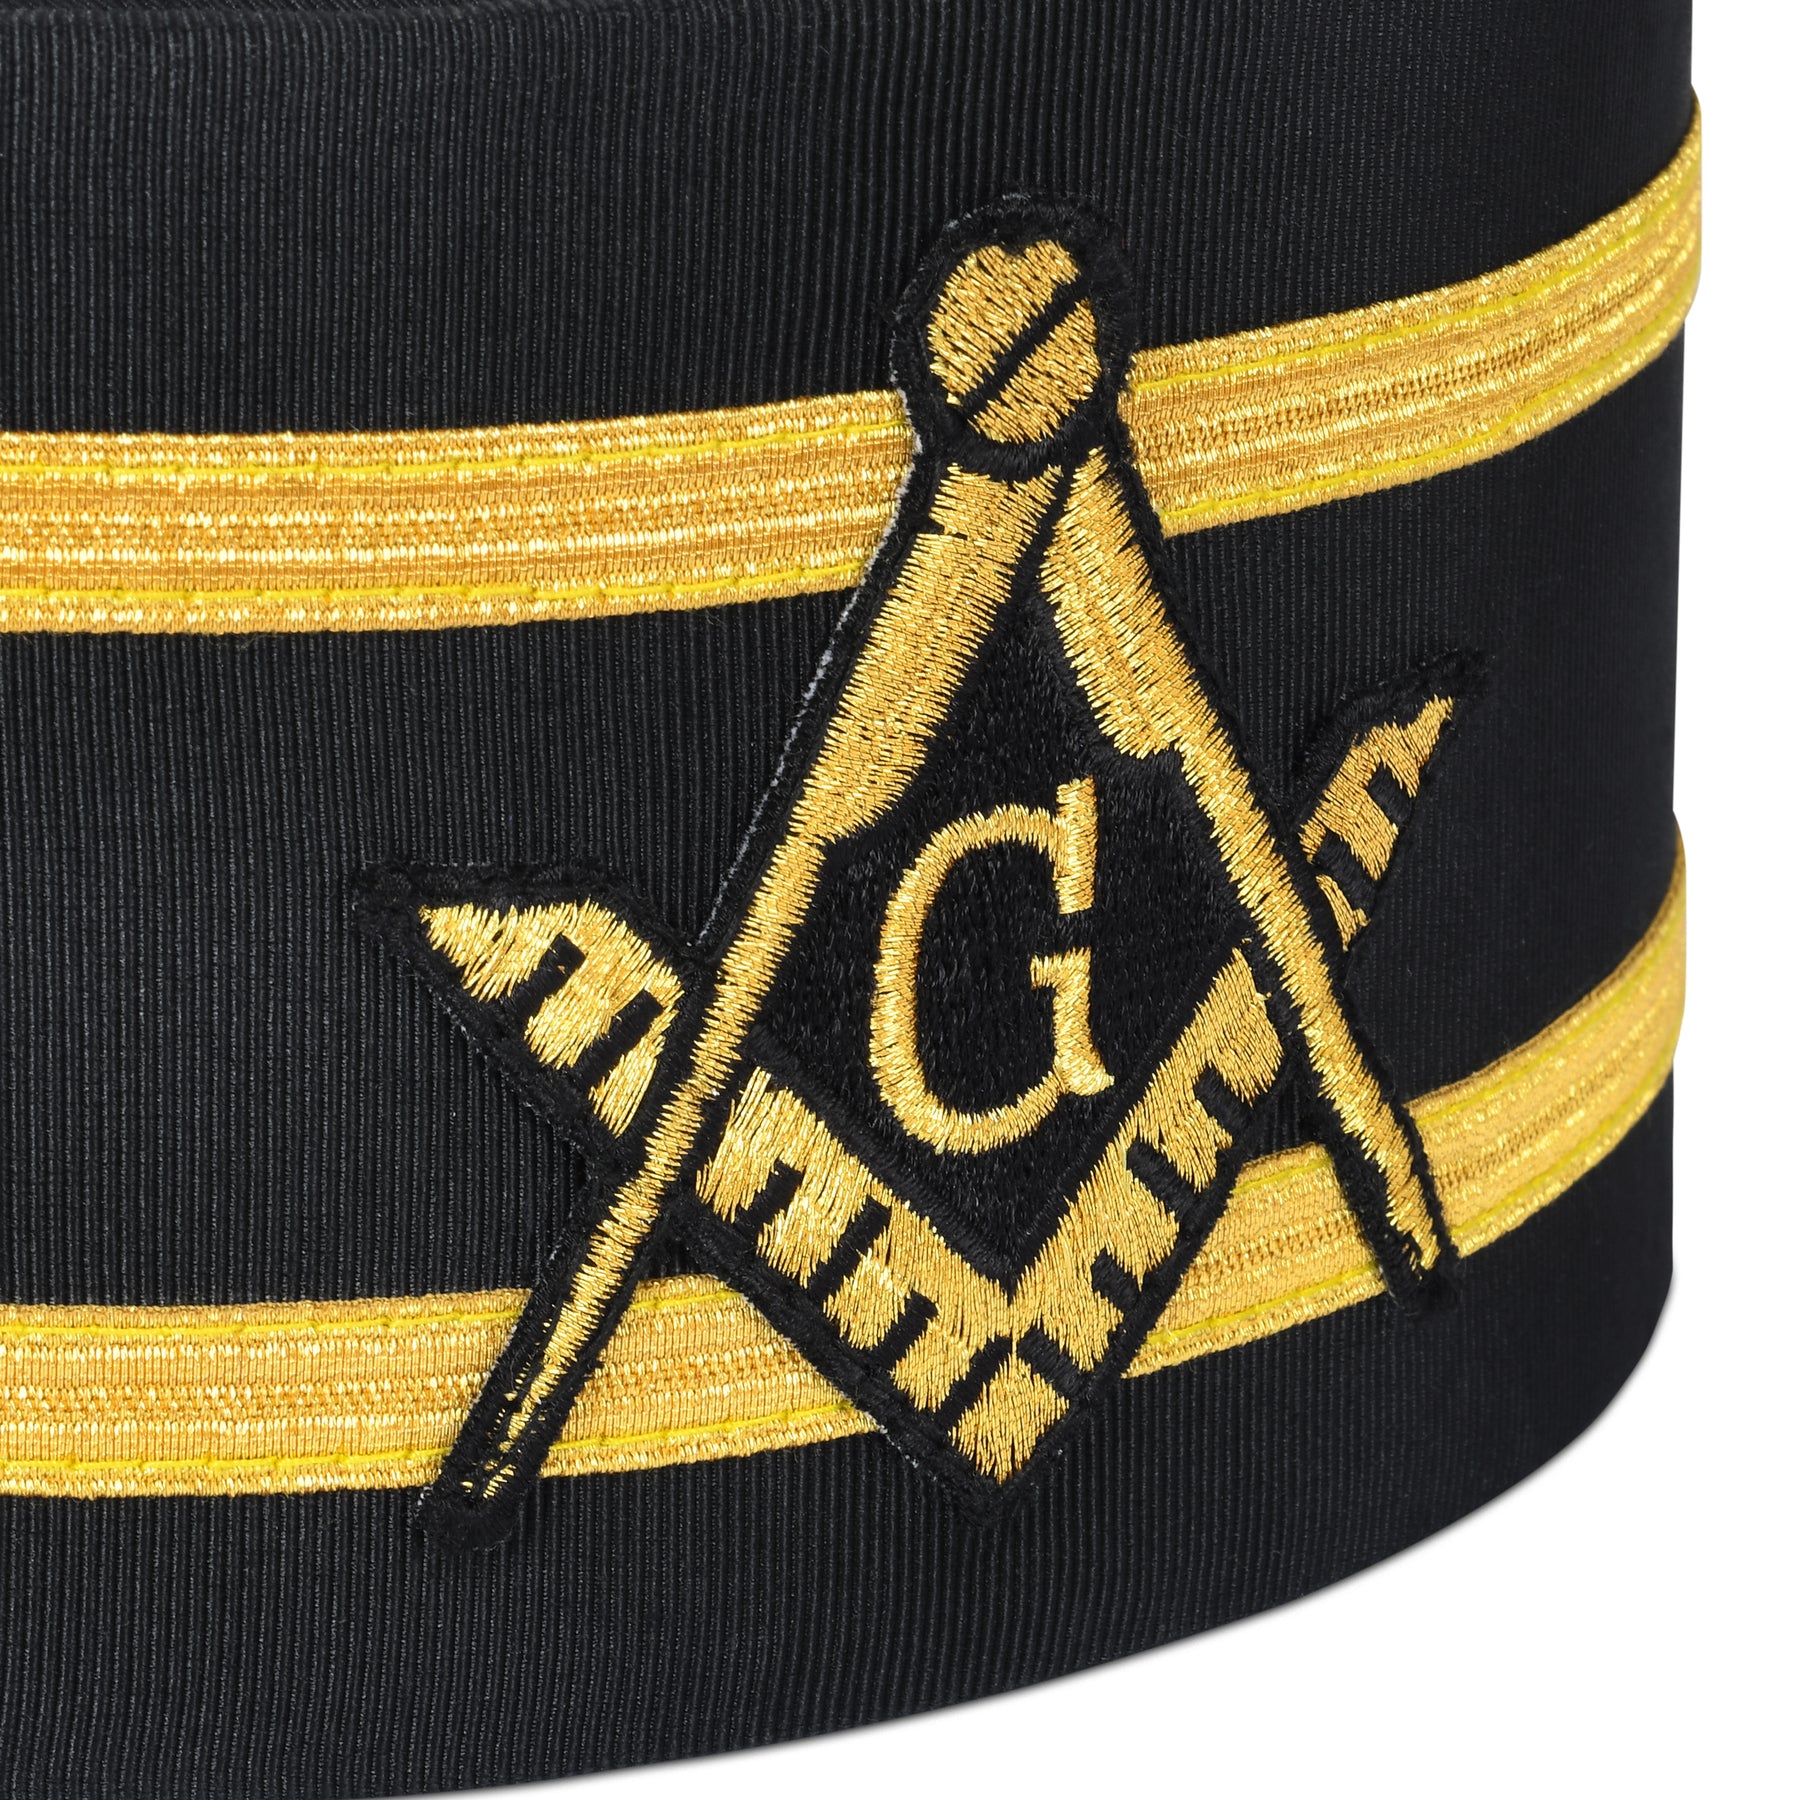 Master Mason Blue Lodge Crown Cap - Black With Double Braid - Bricks Masons